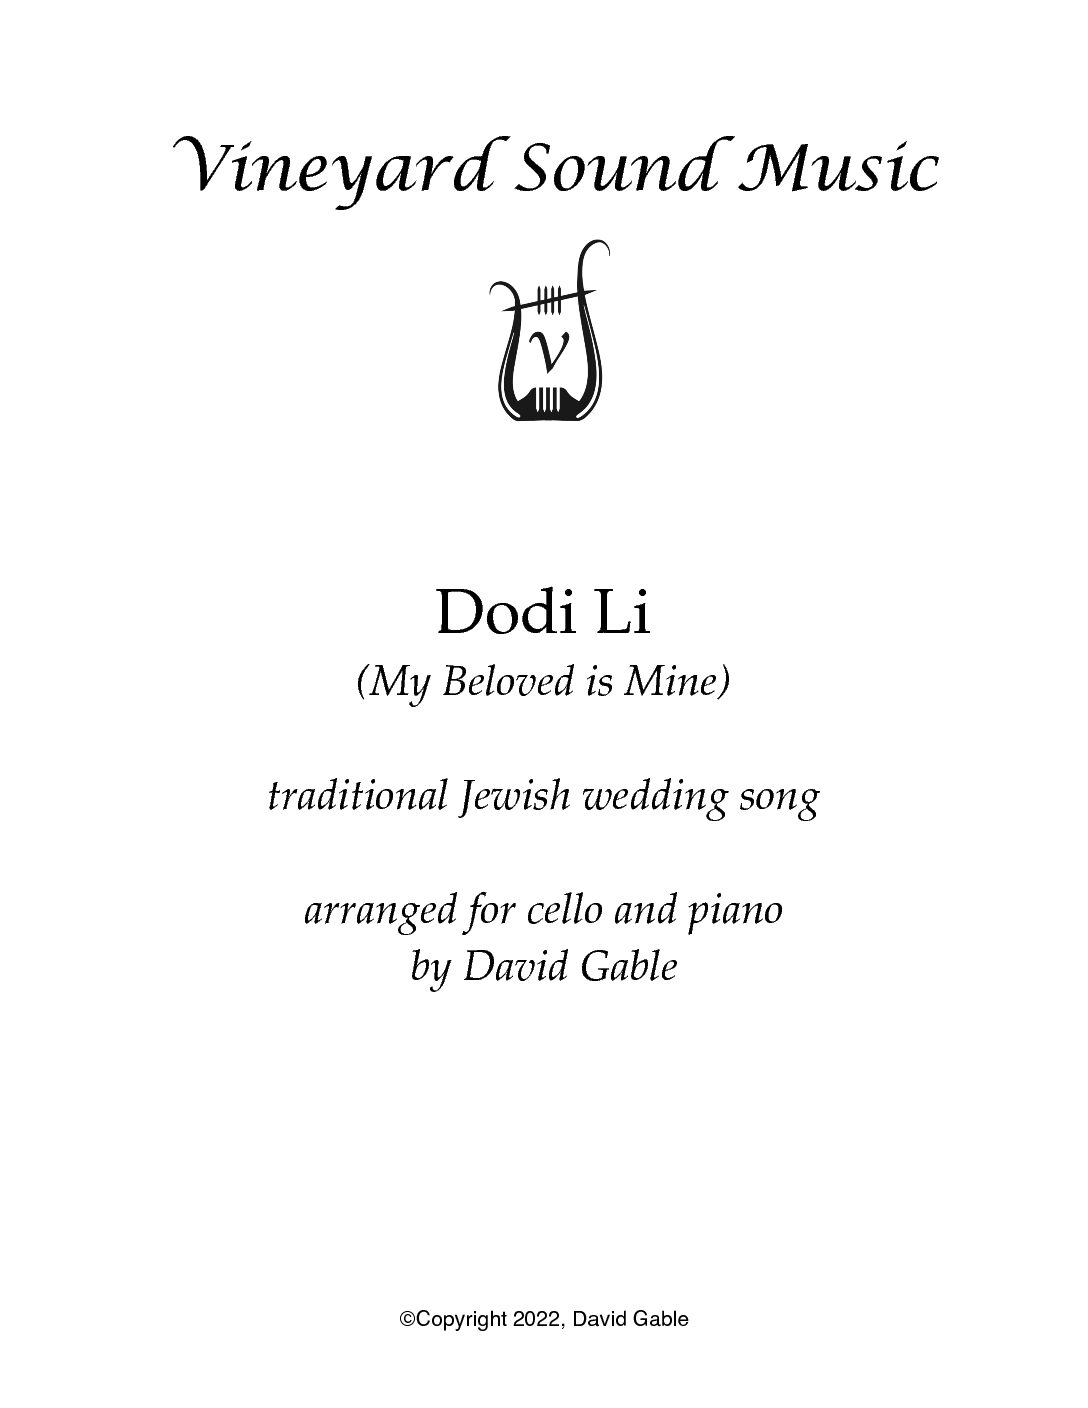 Dodi Li (My Beloved is Mine) (cello and piano) Vineyard Sound Music